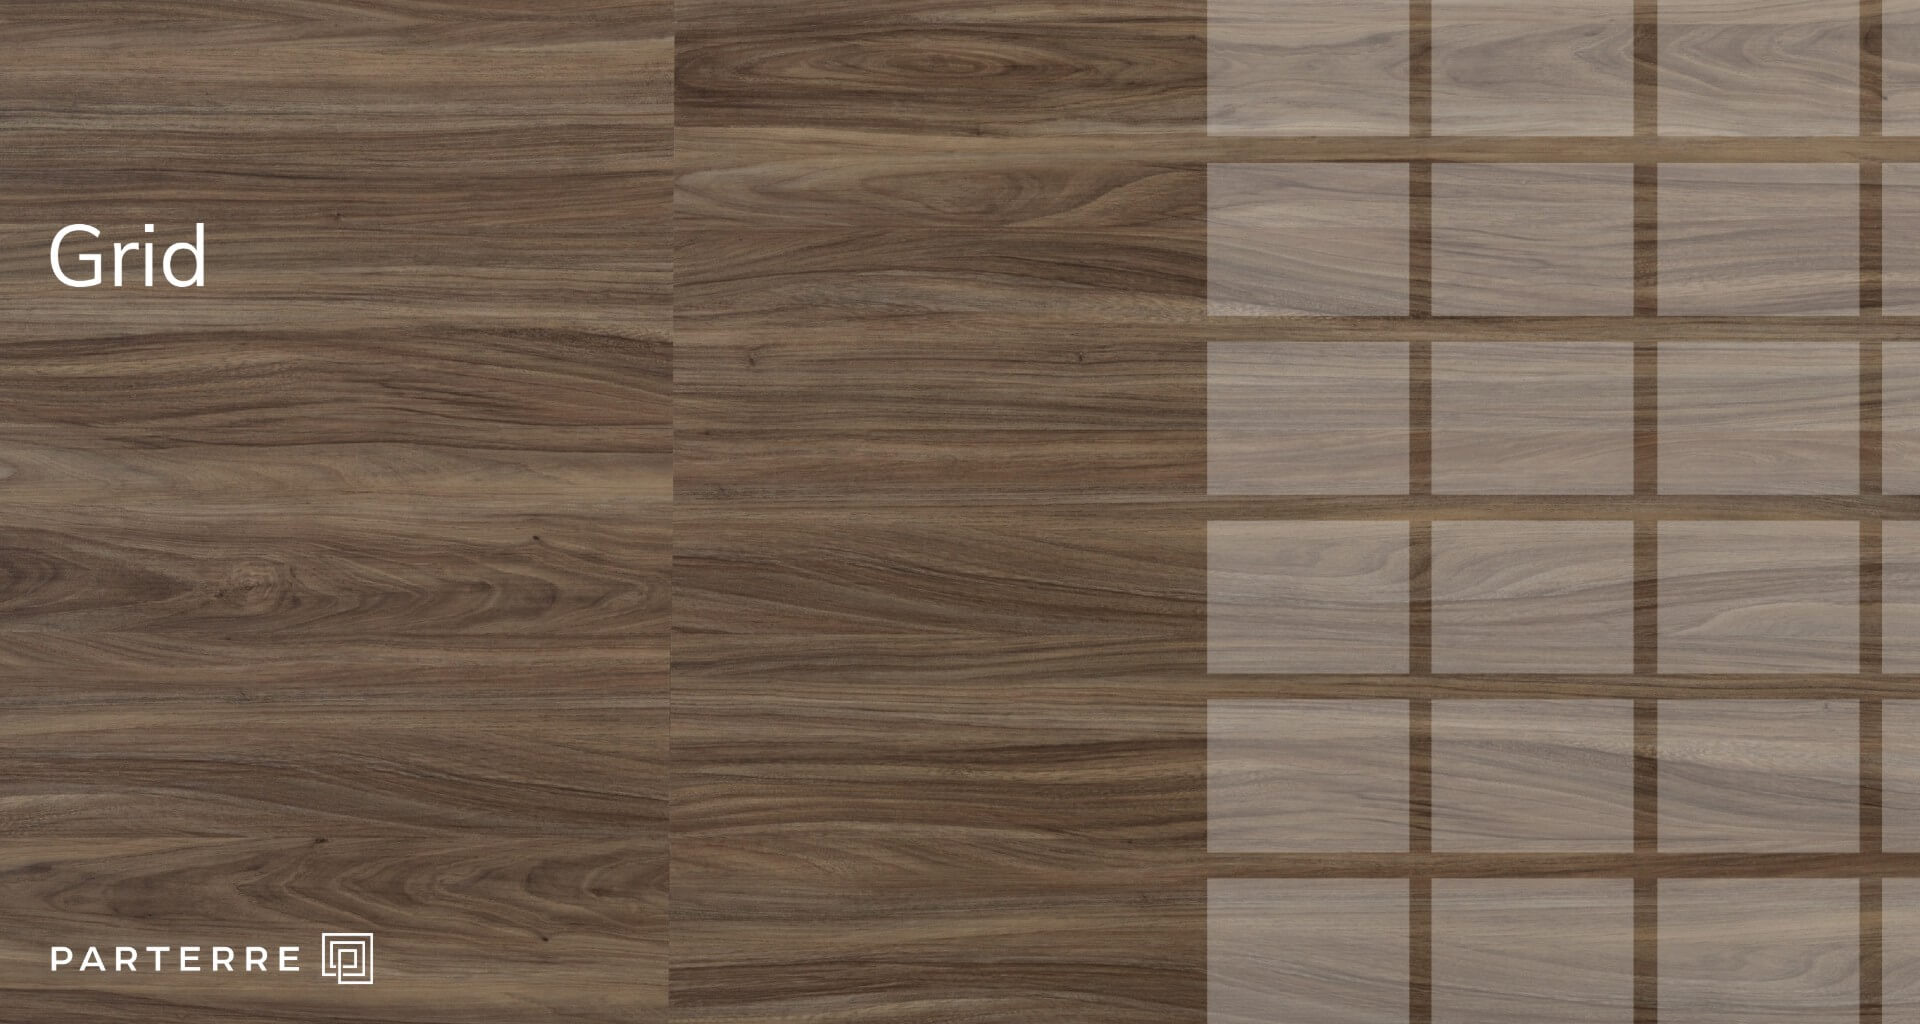 9 Vinyl Flooring Patterns For Your Next, Vinyl Floor Covering Patterns